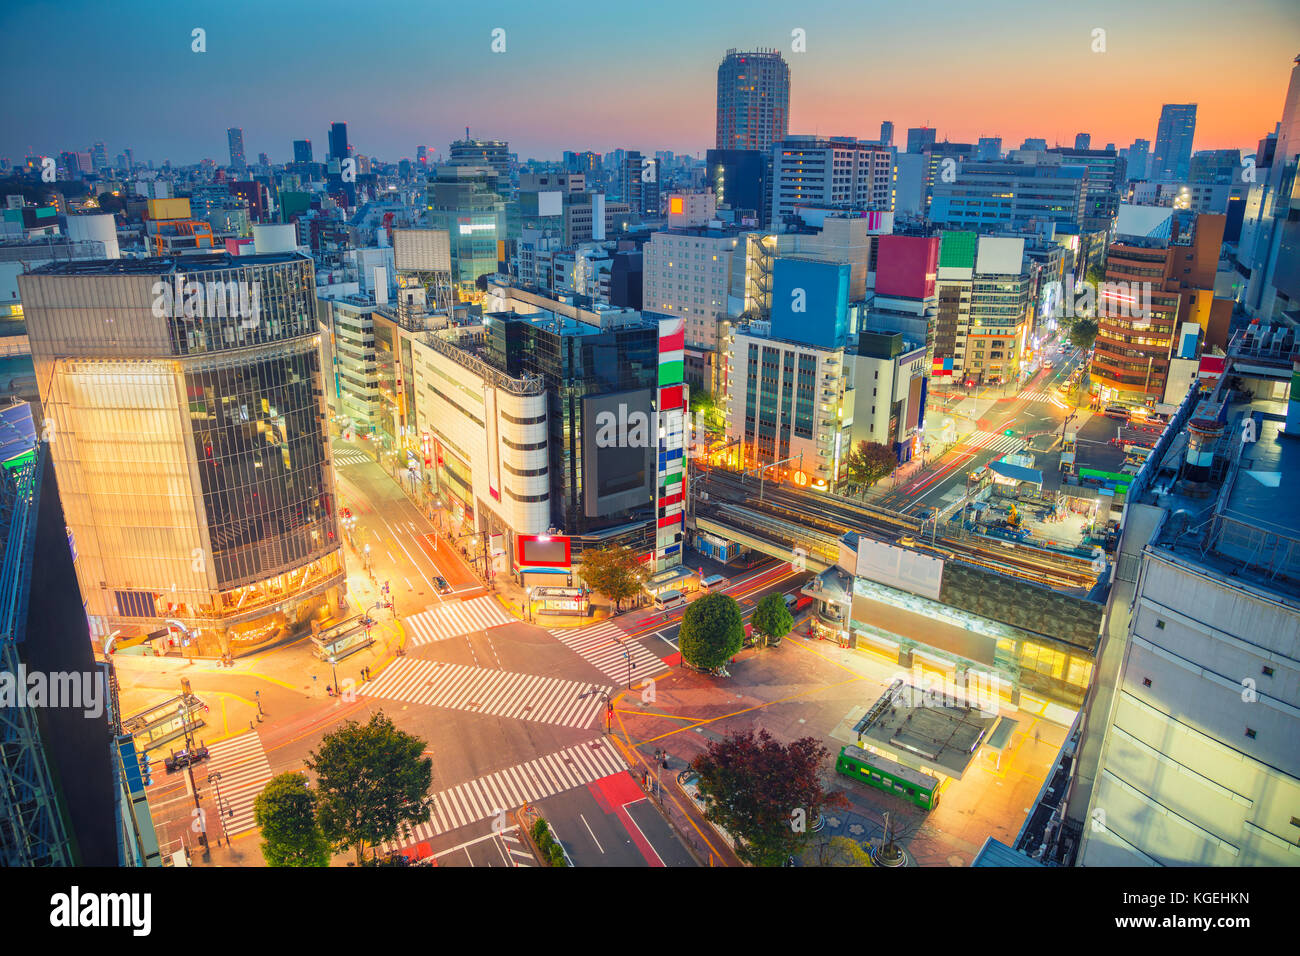 Tokyo. Cityscape image of Shibuya crossing in Tokyo, Japan during sunrise. Stock Photo